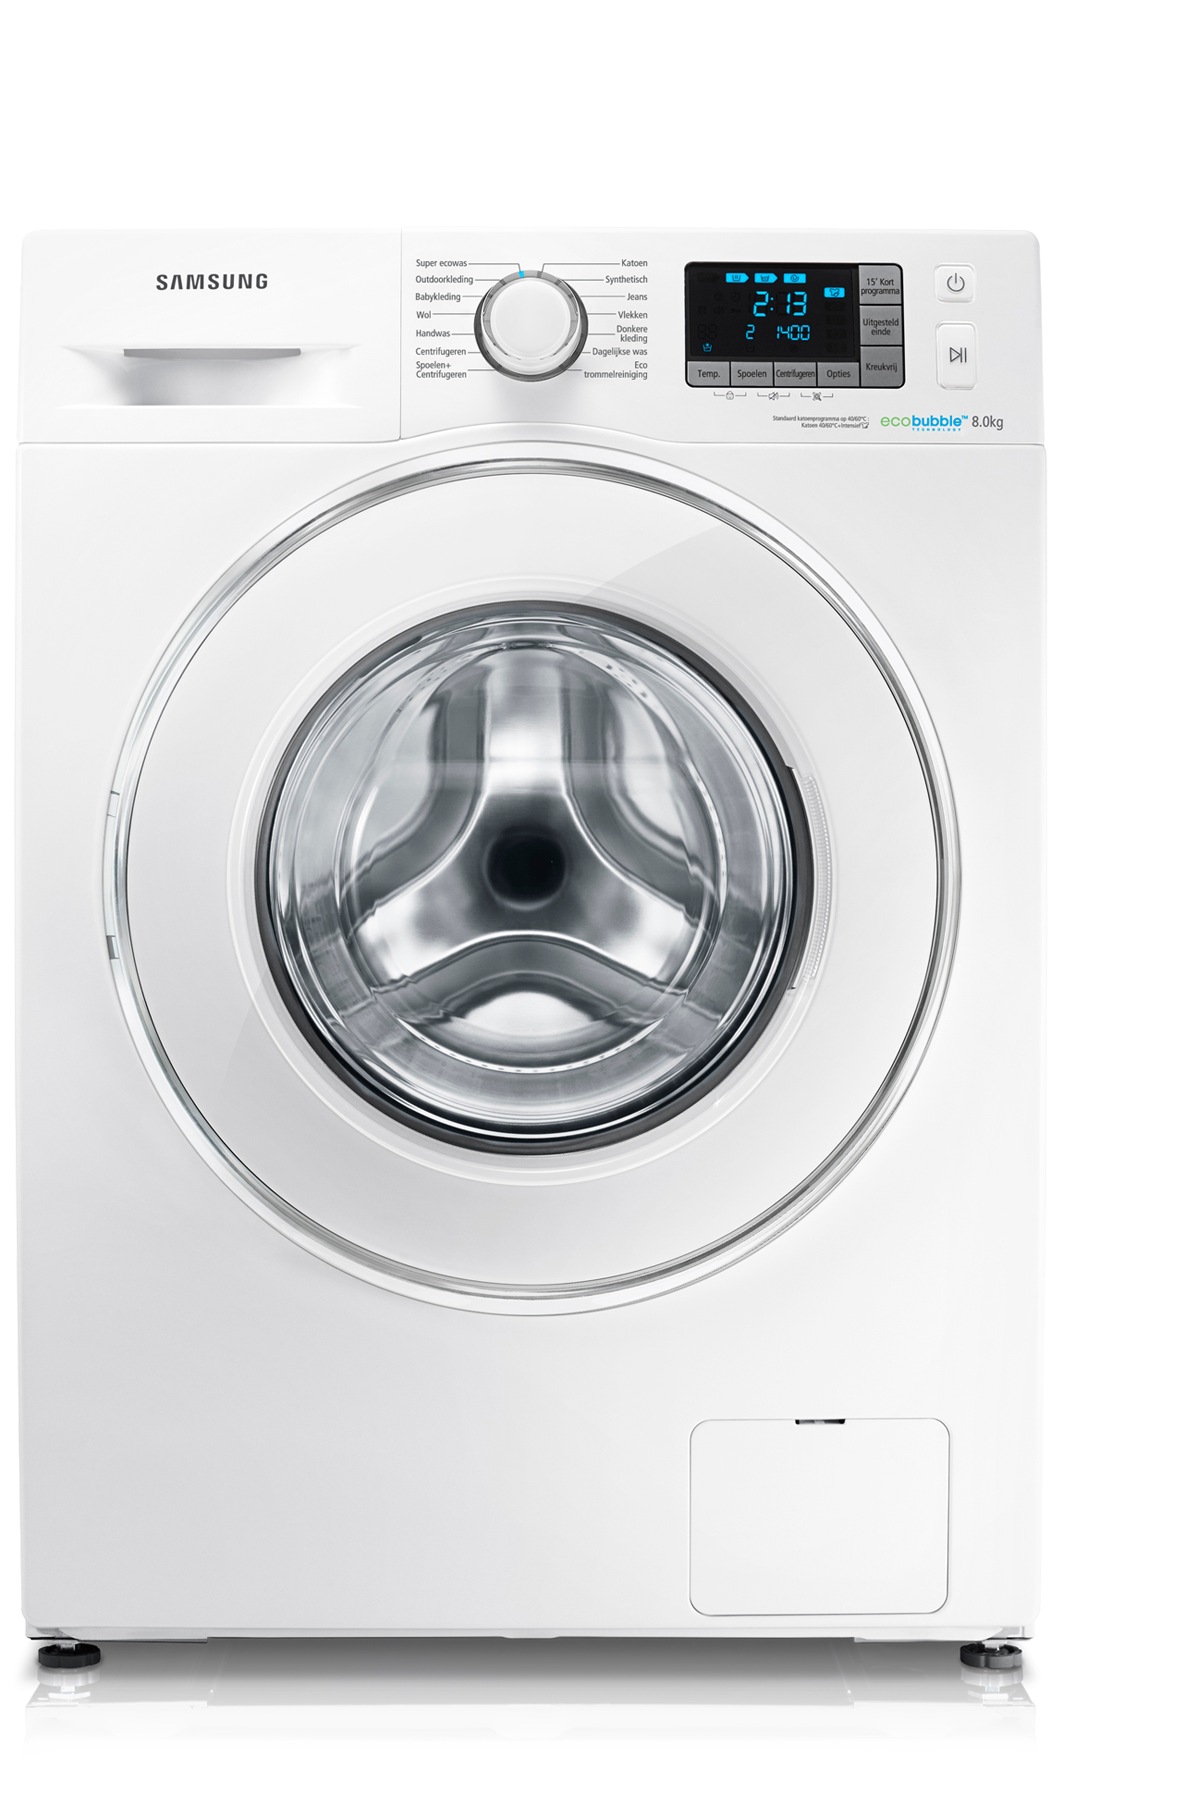 Opknappen Aap markt A+++ EcoBubble 1400 toeren 8 KG Wasmachine | Samsung Service NL